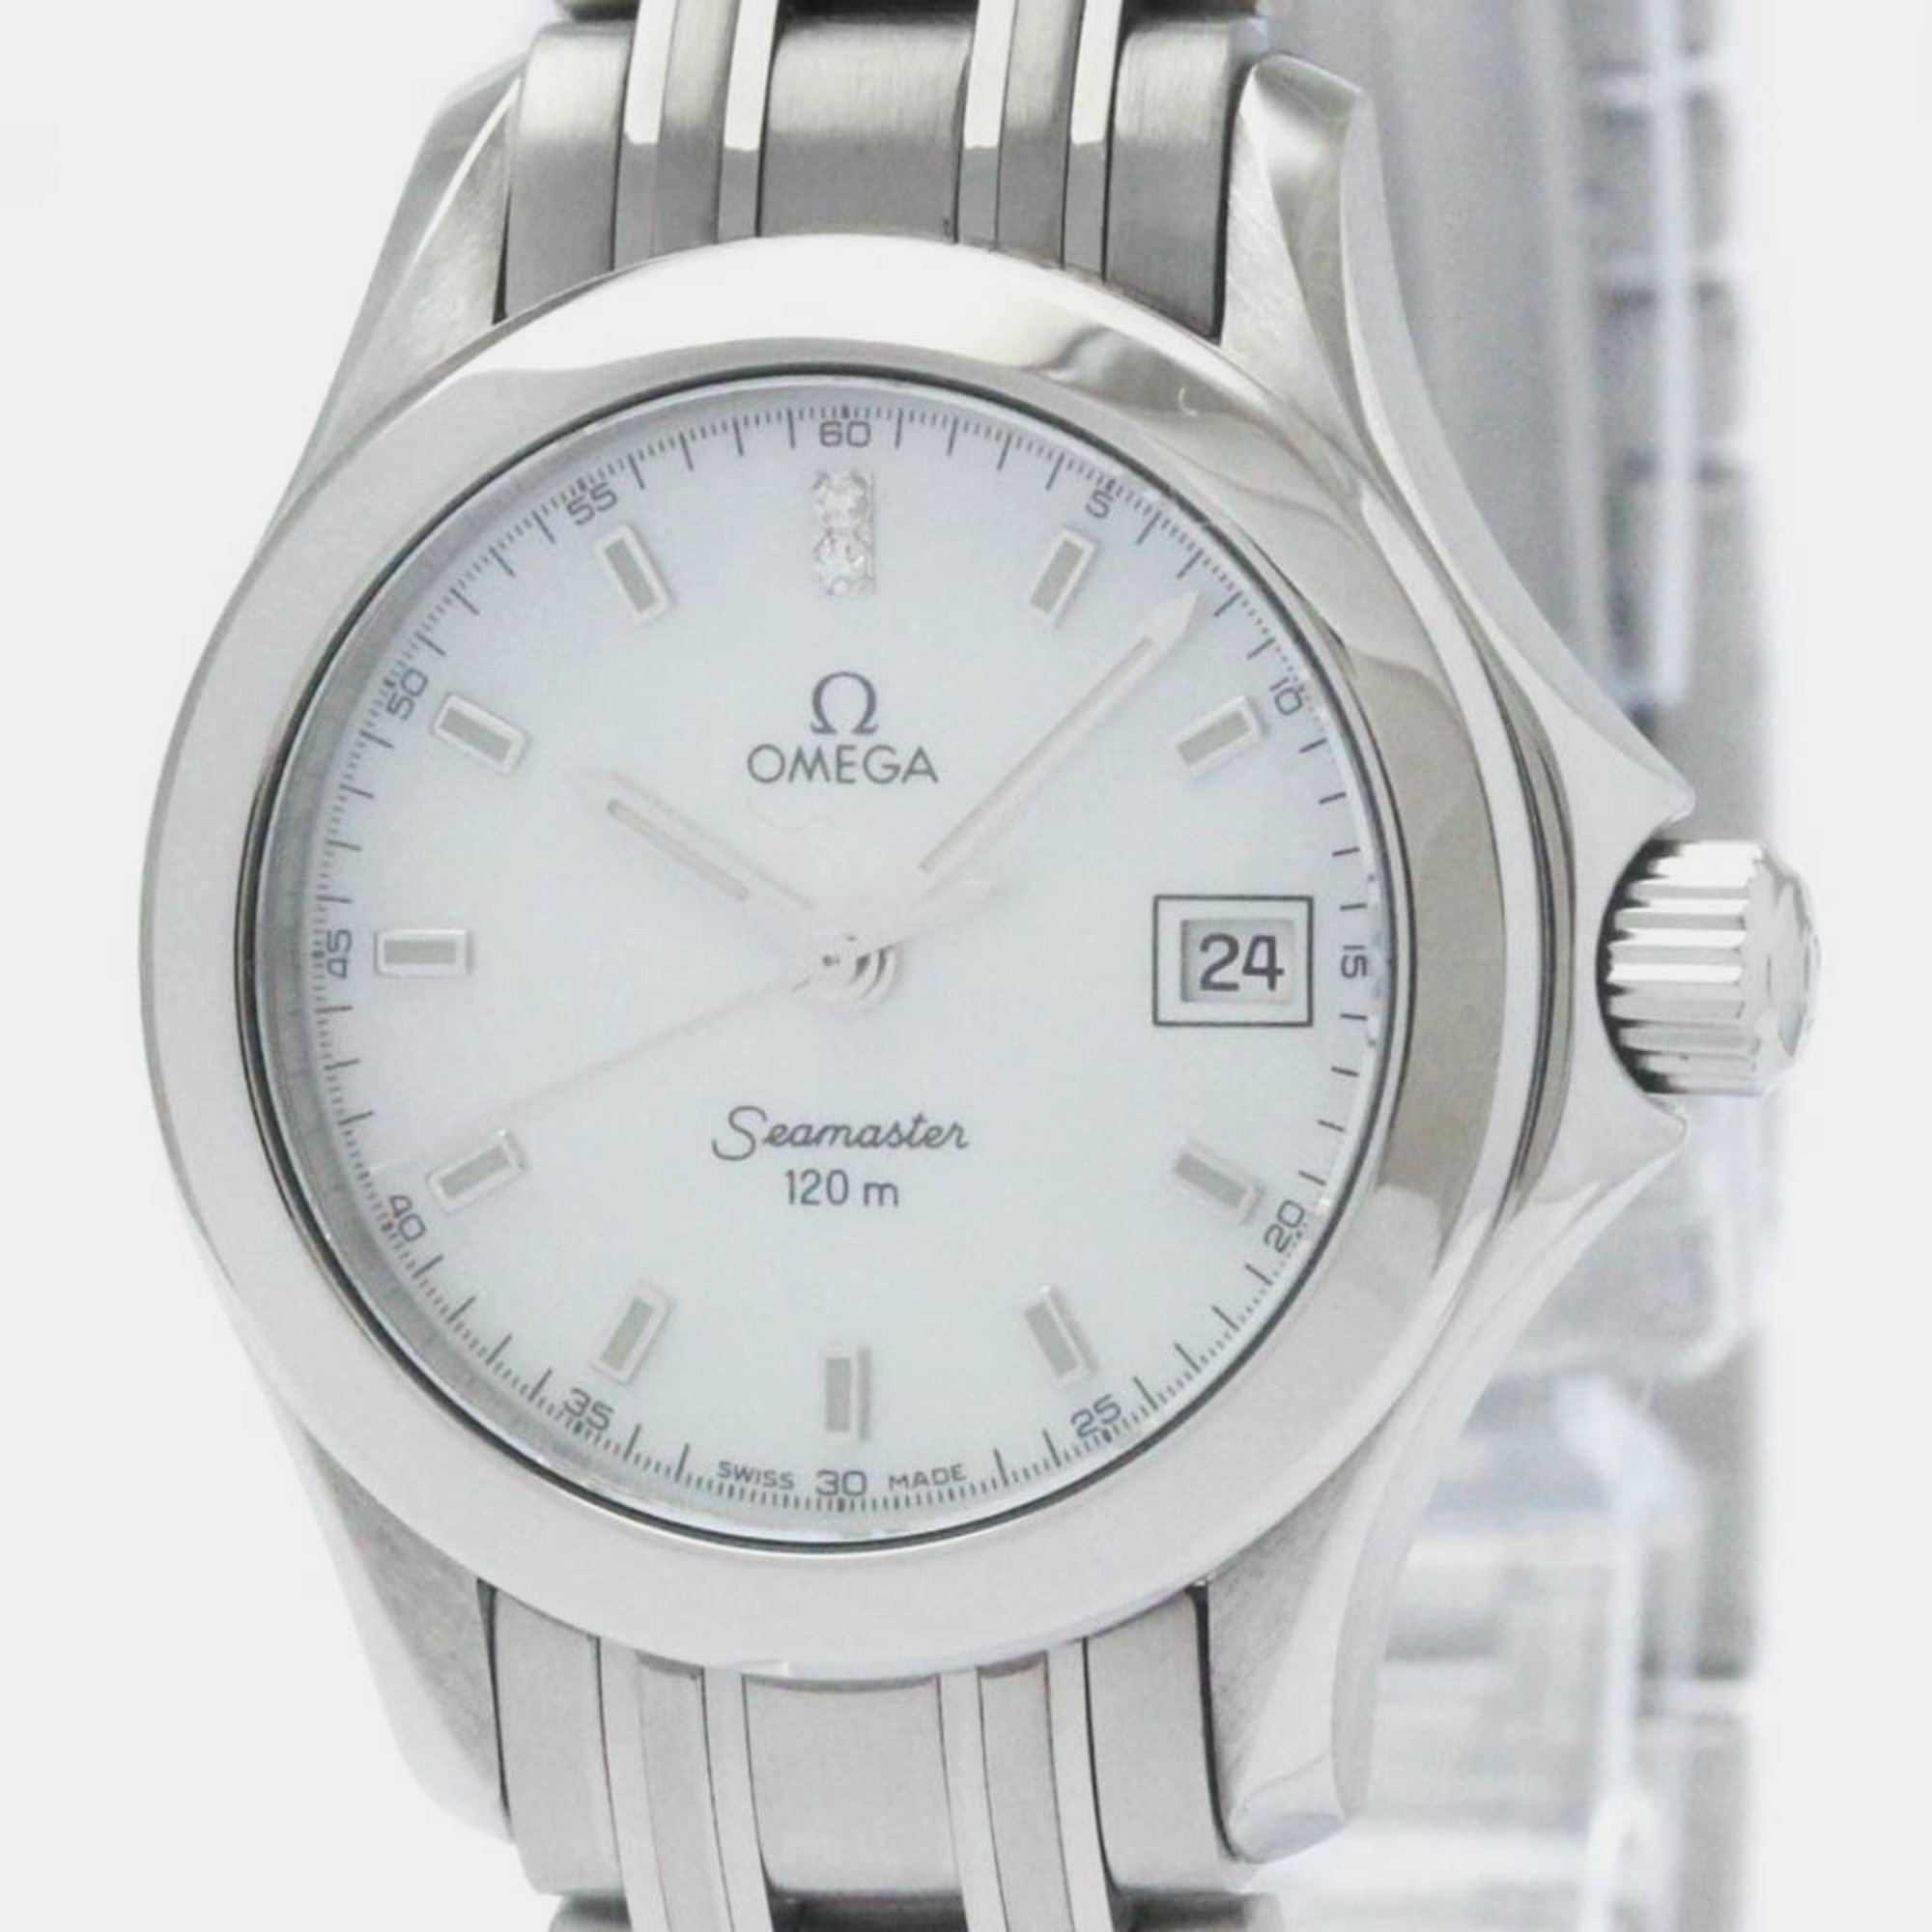 

Omega White Stainless Steel Seamaster BF568955 Women's Wristwatch